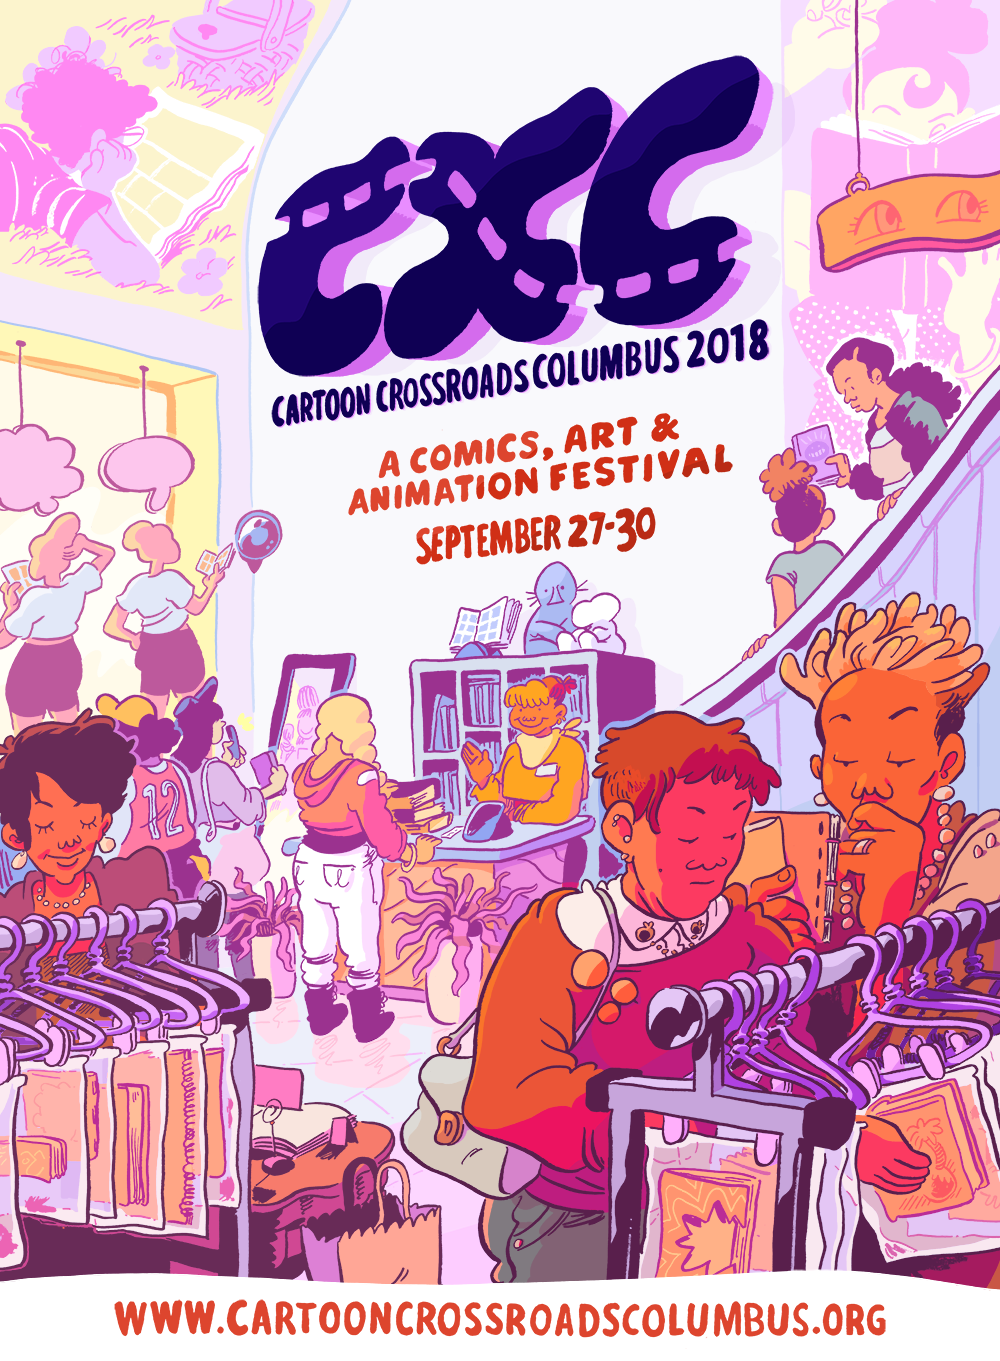 Cartoon Crossroads Columbus 2018 poster